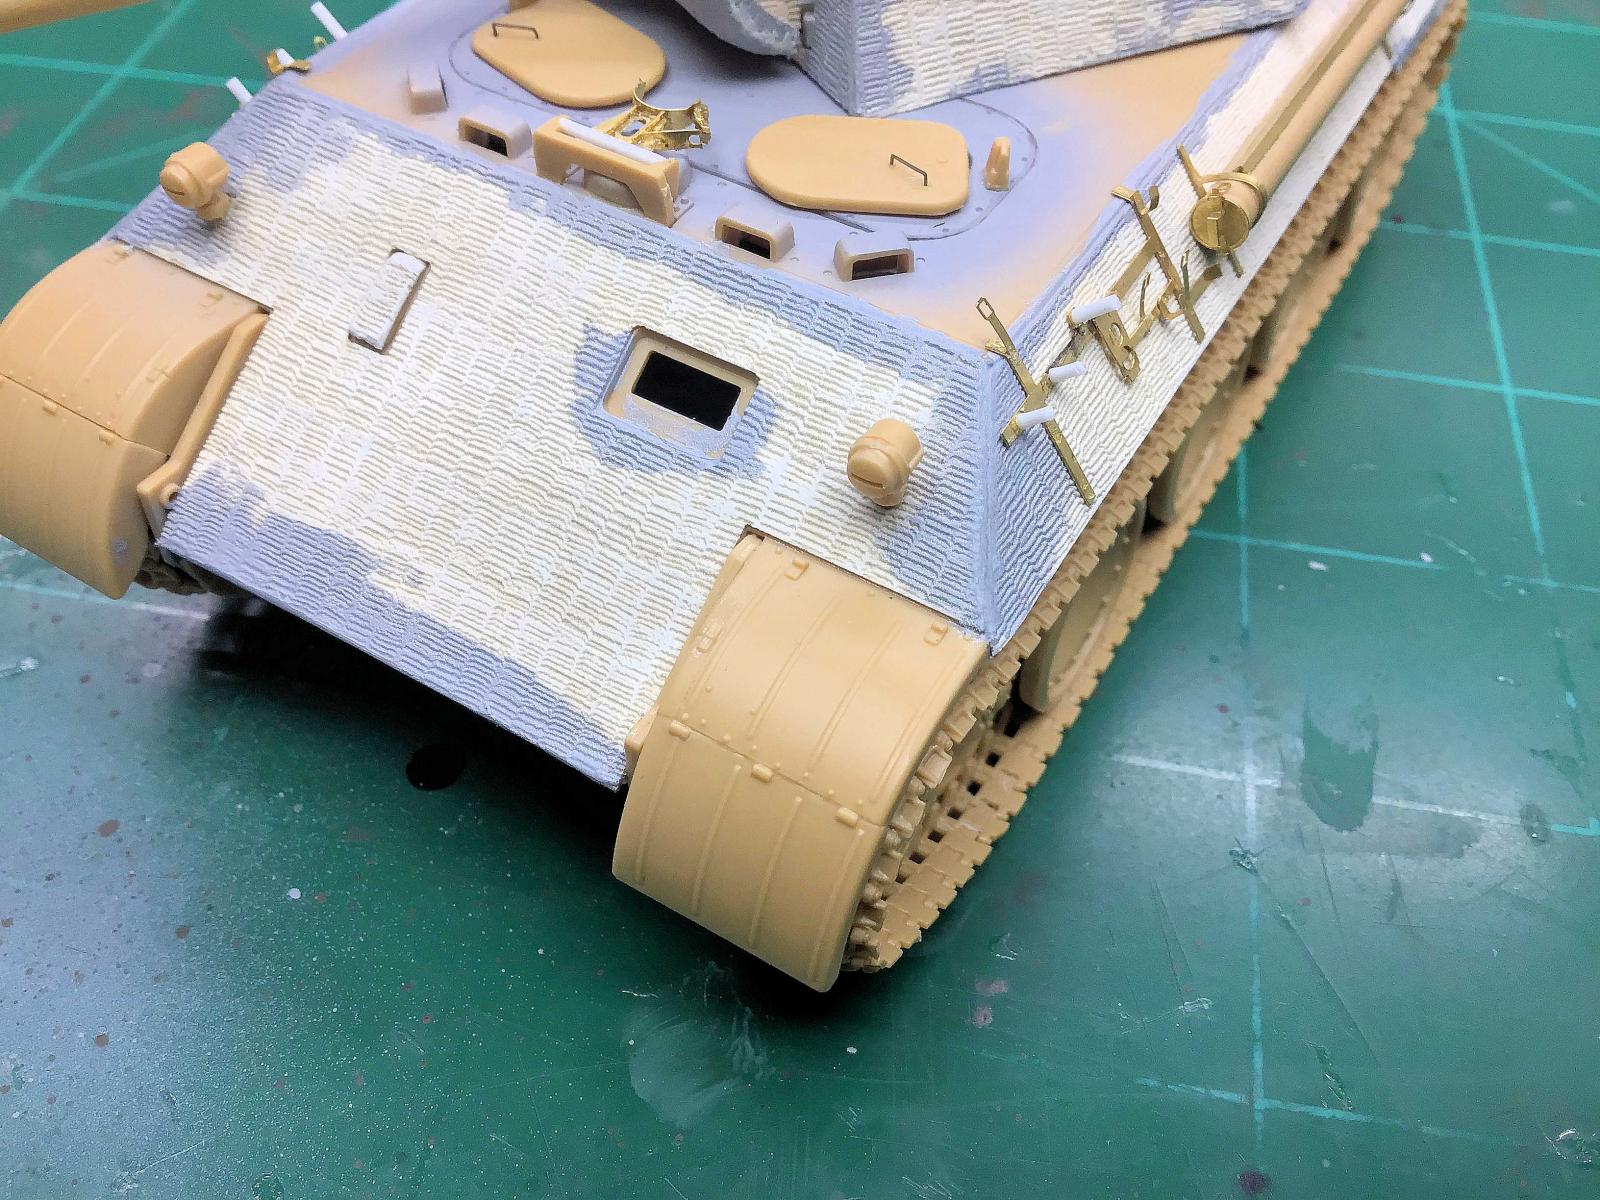 Tamiya 1/35 Panther Ausf A - Kit Review 